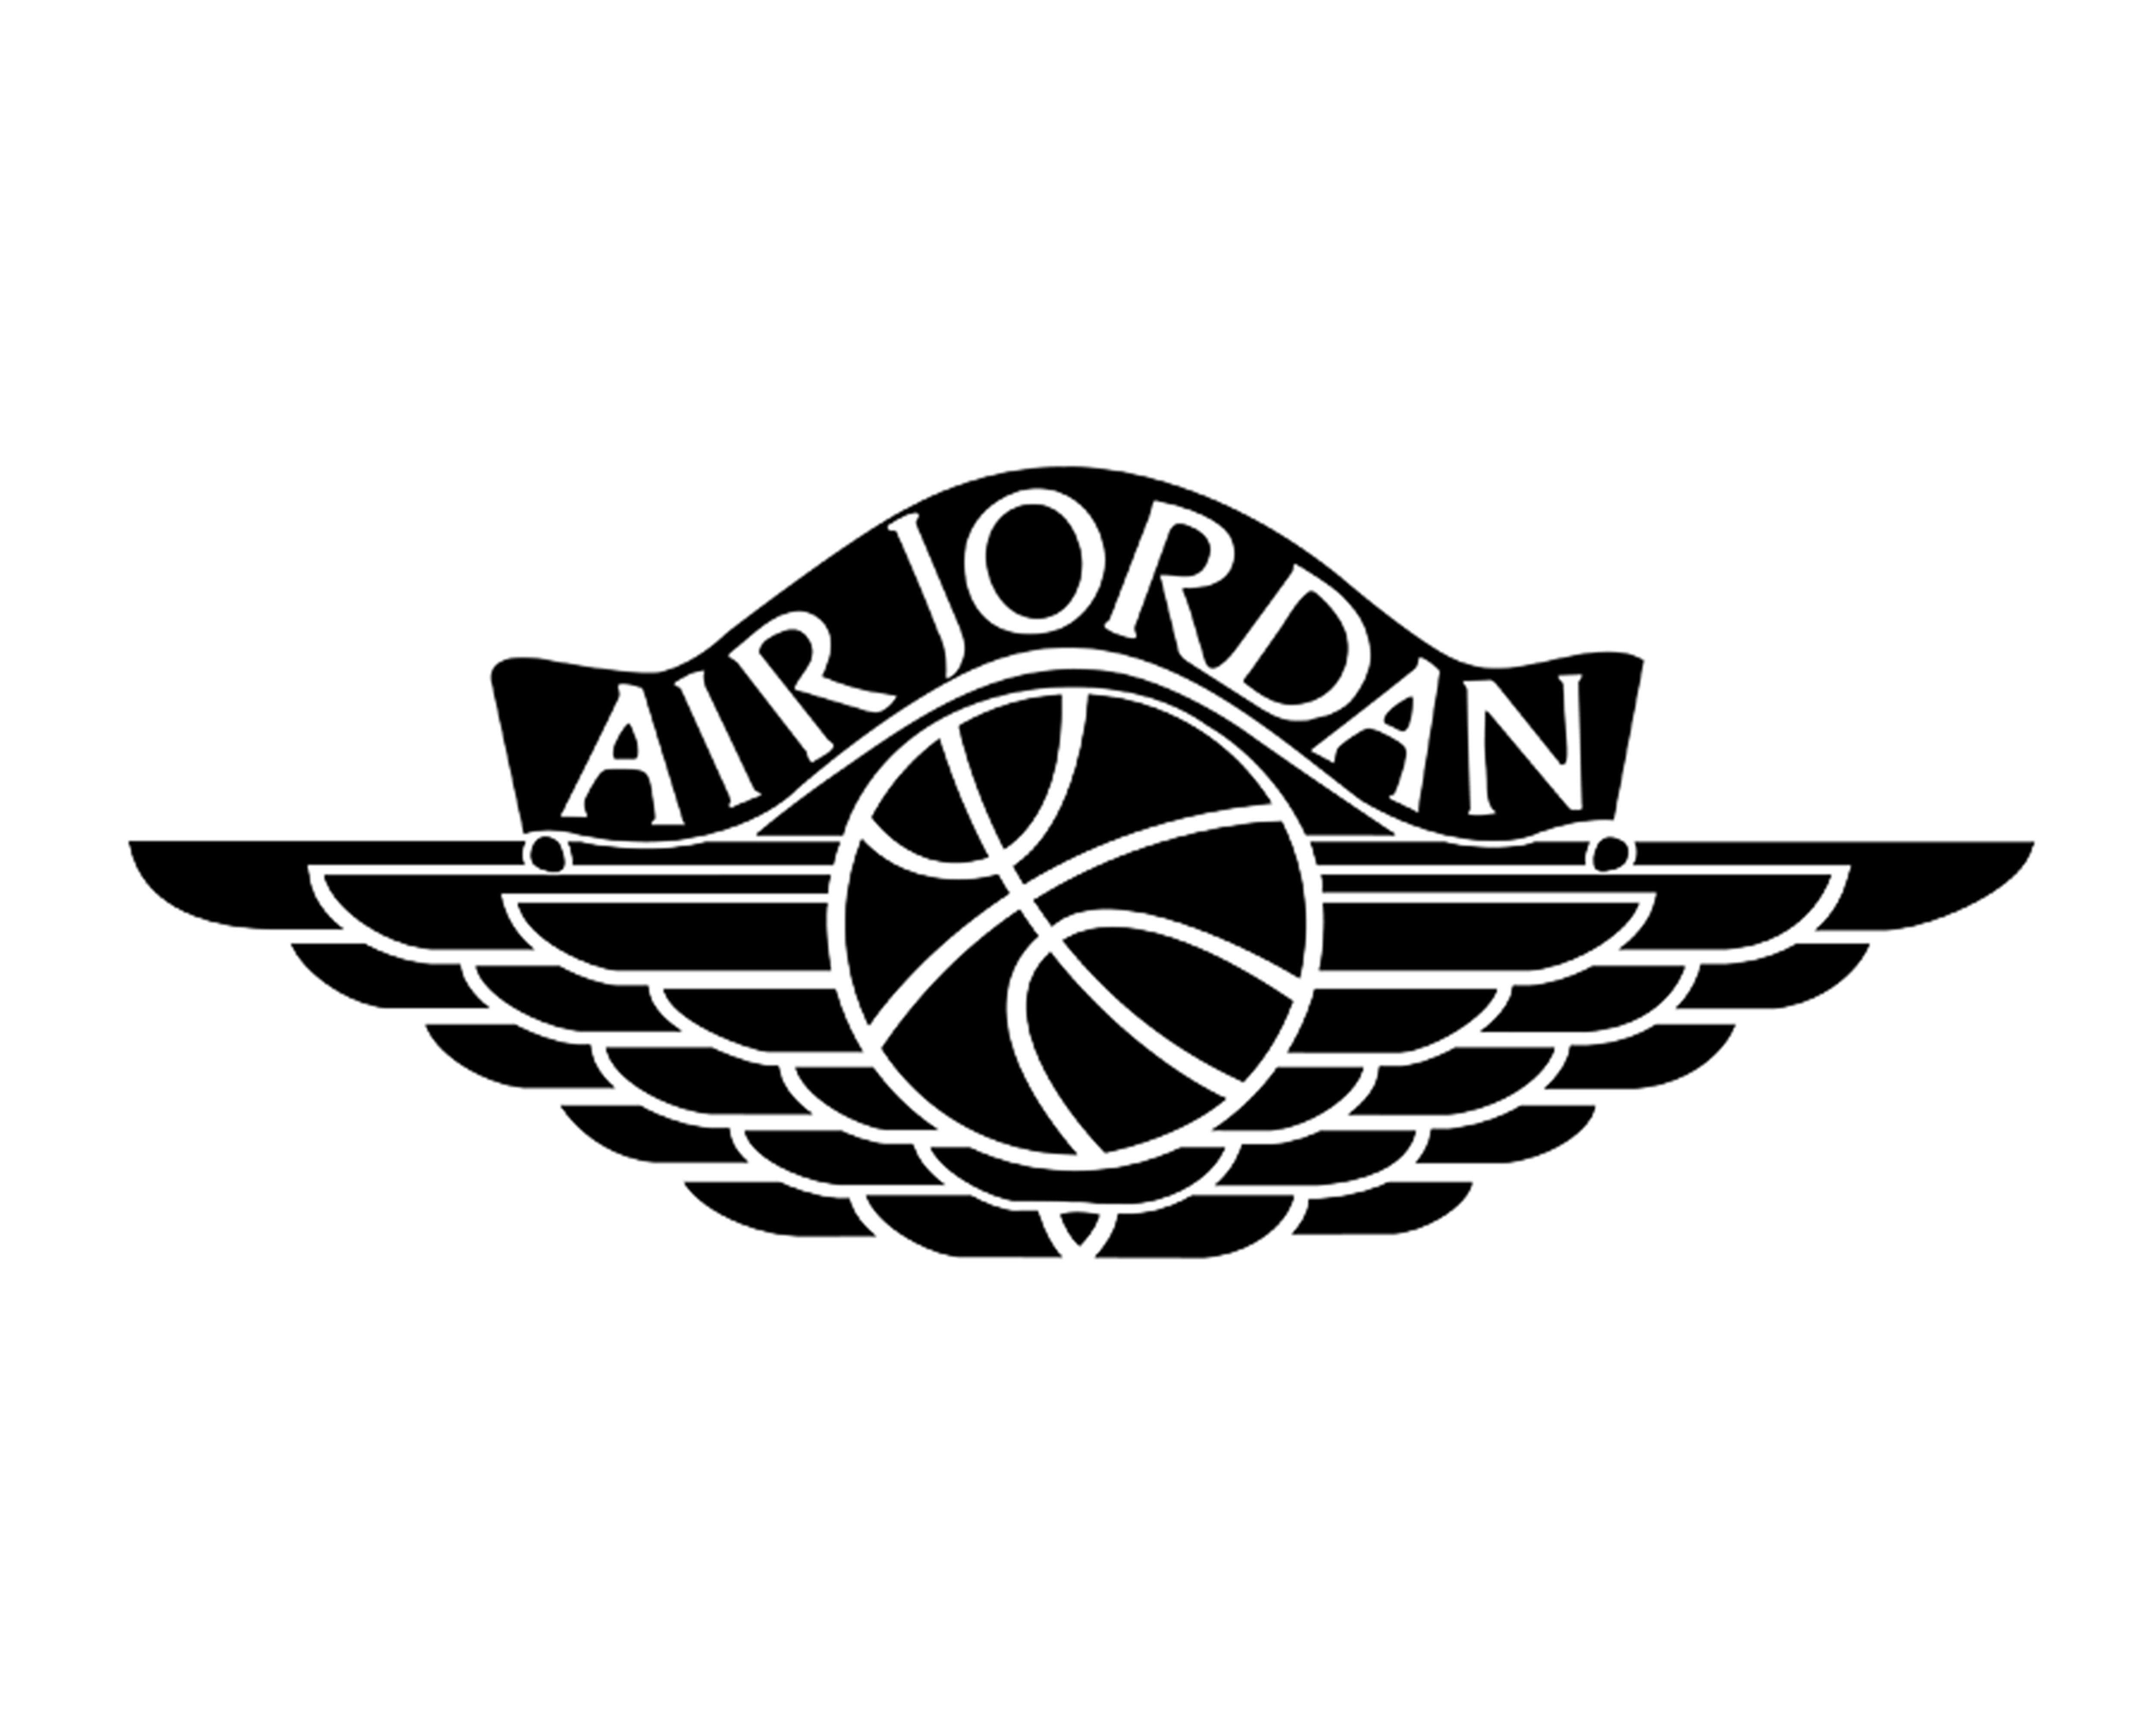 Jordan Logo - JORDAN WINGS LOGO PAINTING STENCIL SIZE PACK *HIGH QUALITY*